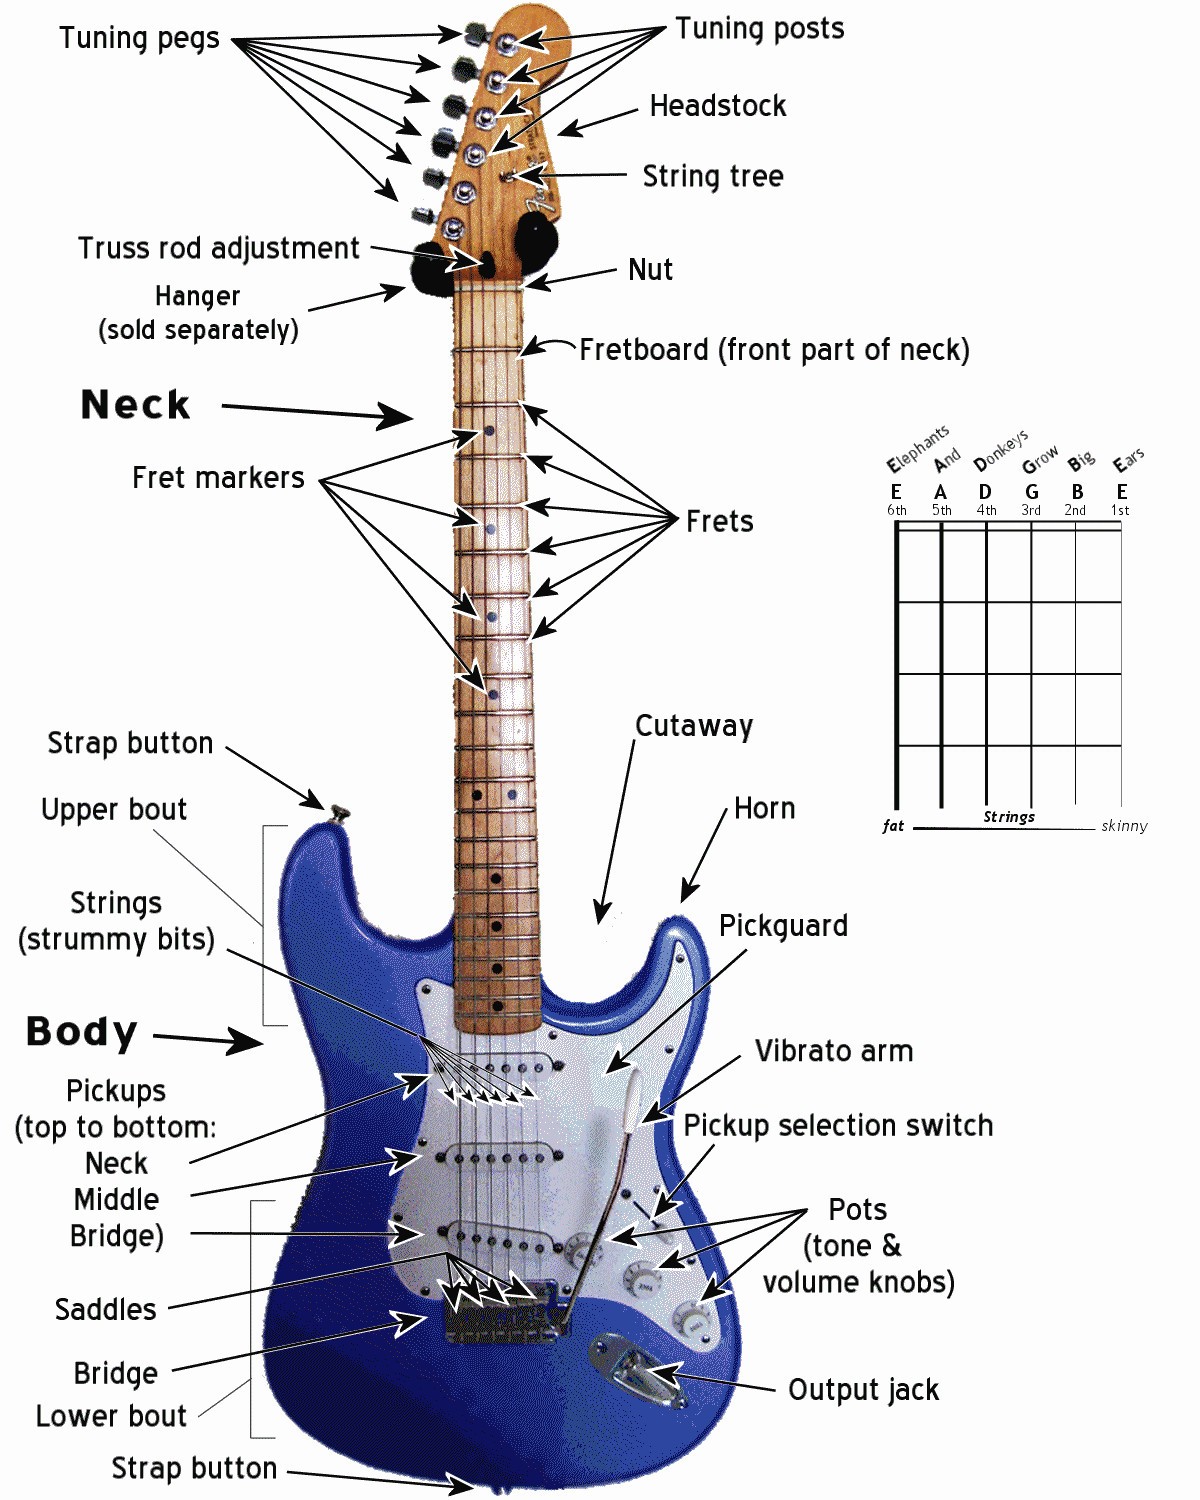 Fender Stratocaster Parts Diagram thetopguitars the top Guitars Bo S Necks and